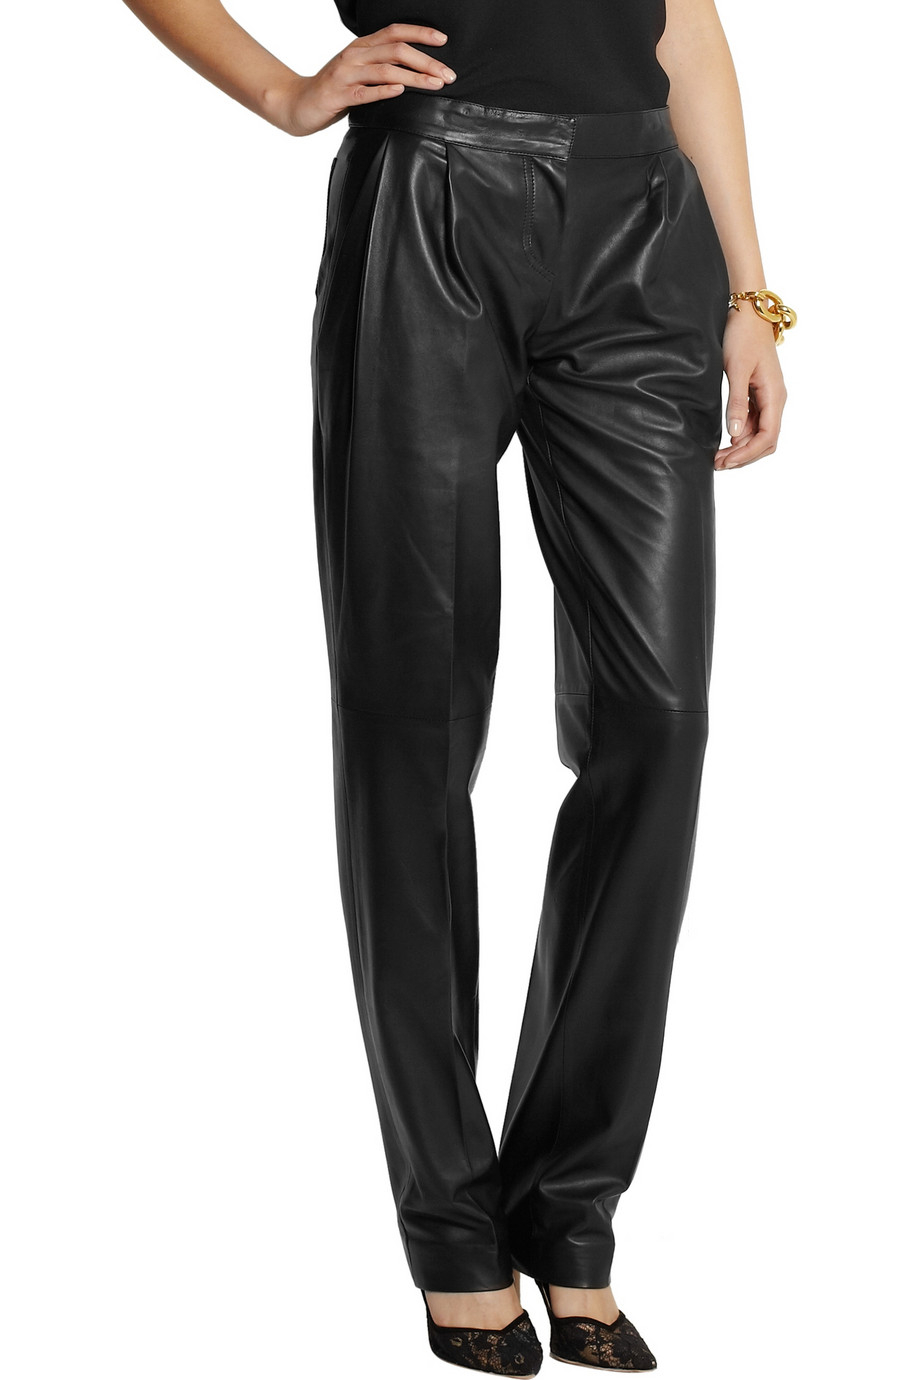 Balmain Leather Straight-leg Pants in Black - Lyst